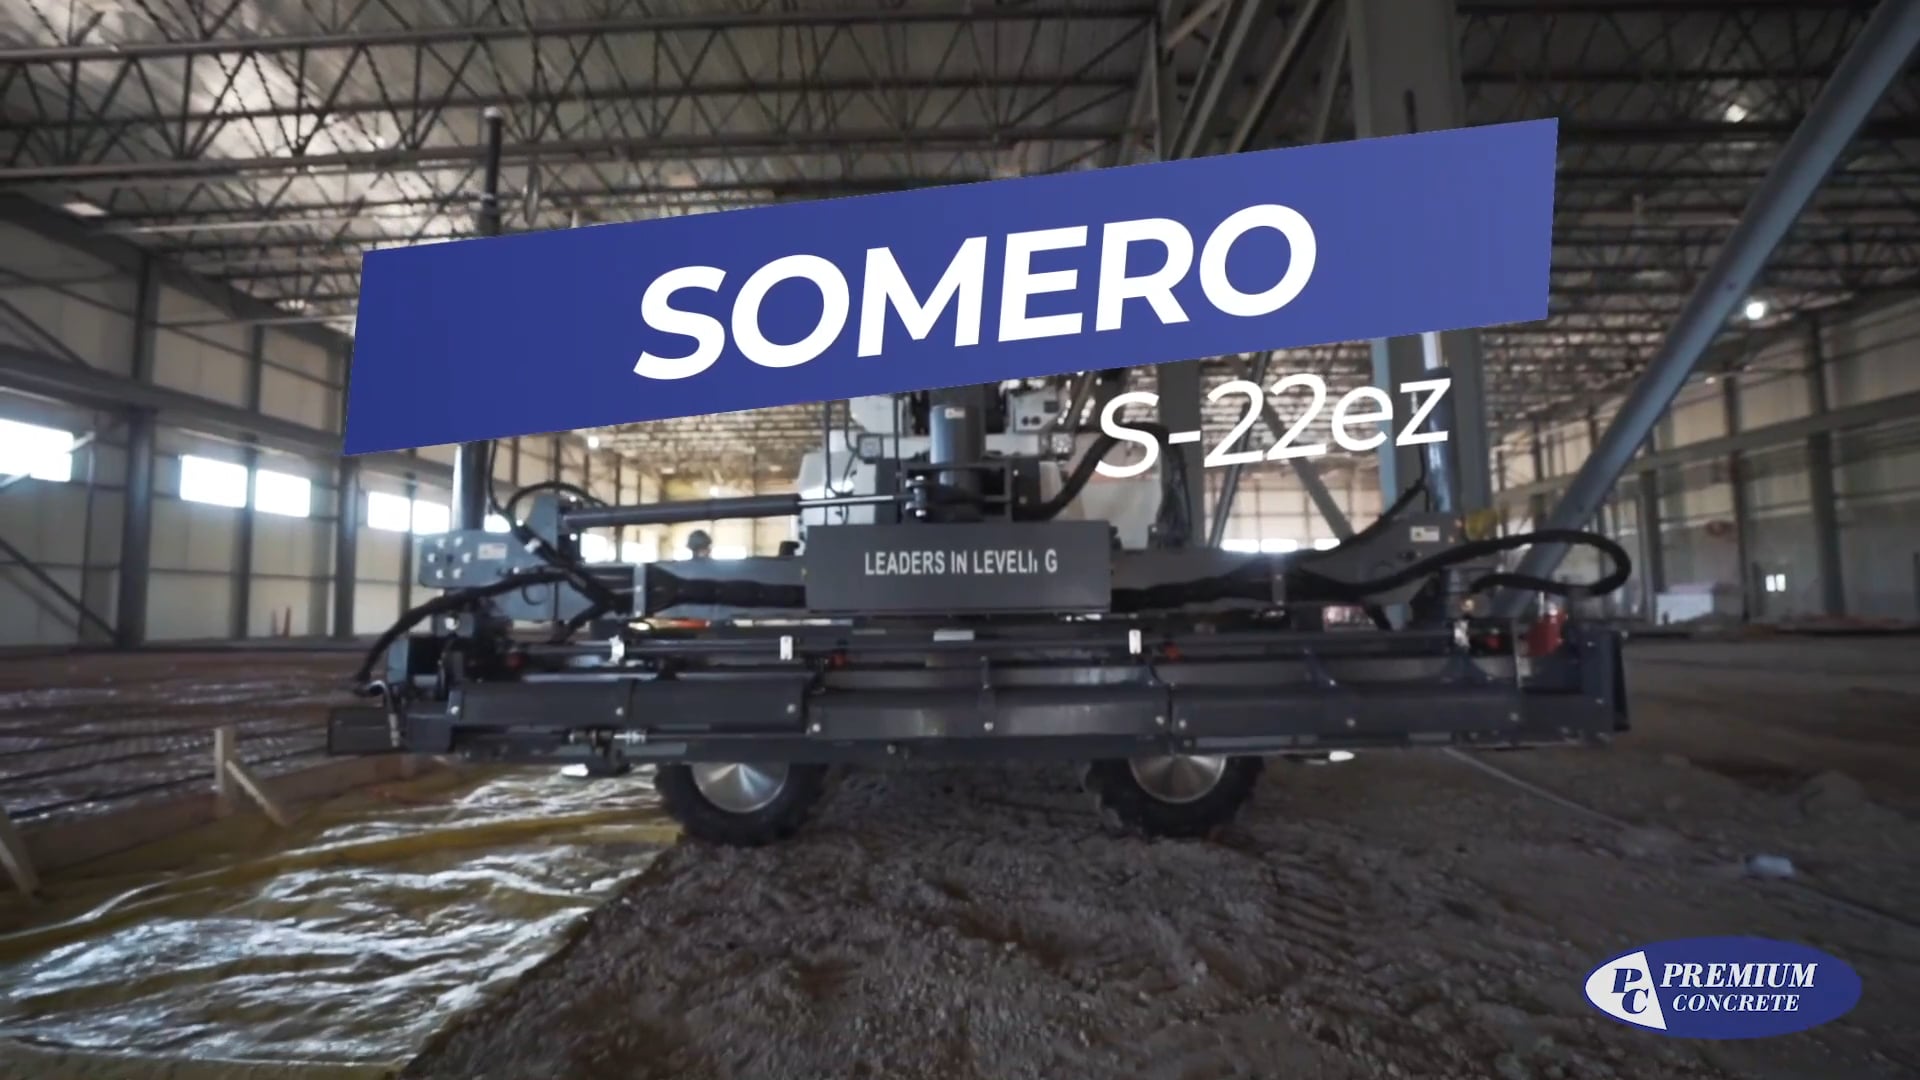 Premium Concrete - OUR NEW LASER SCREED - Somero S-22ez